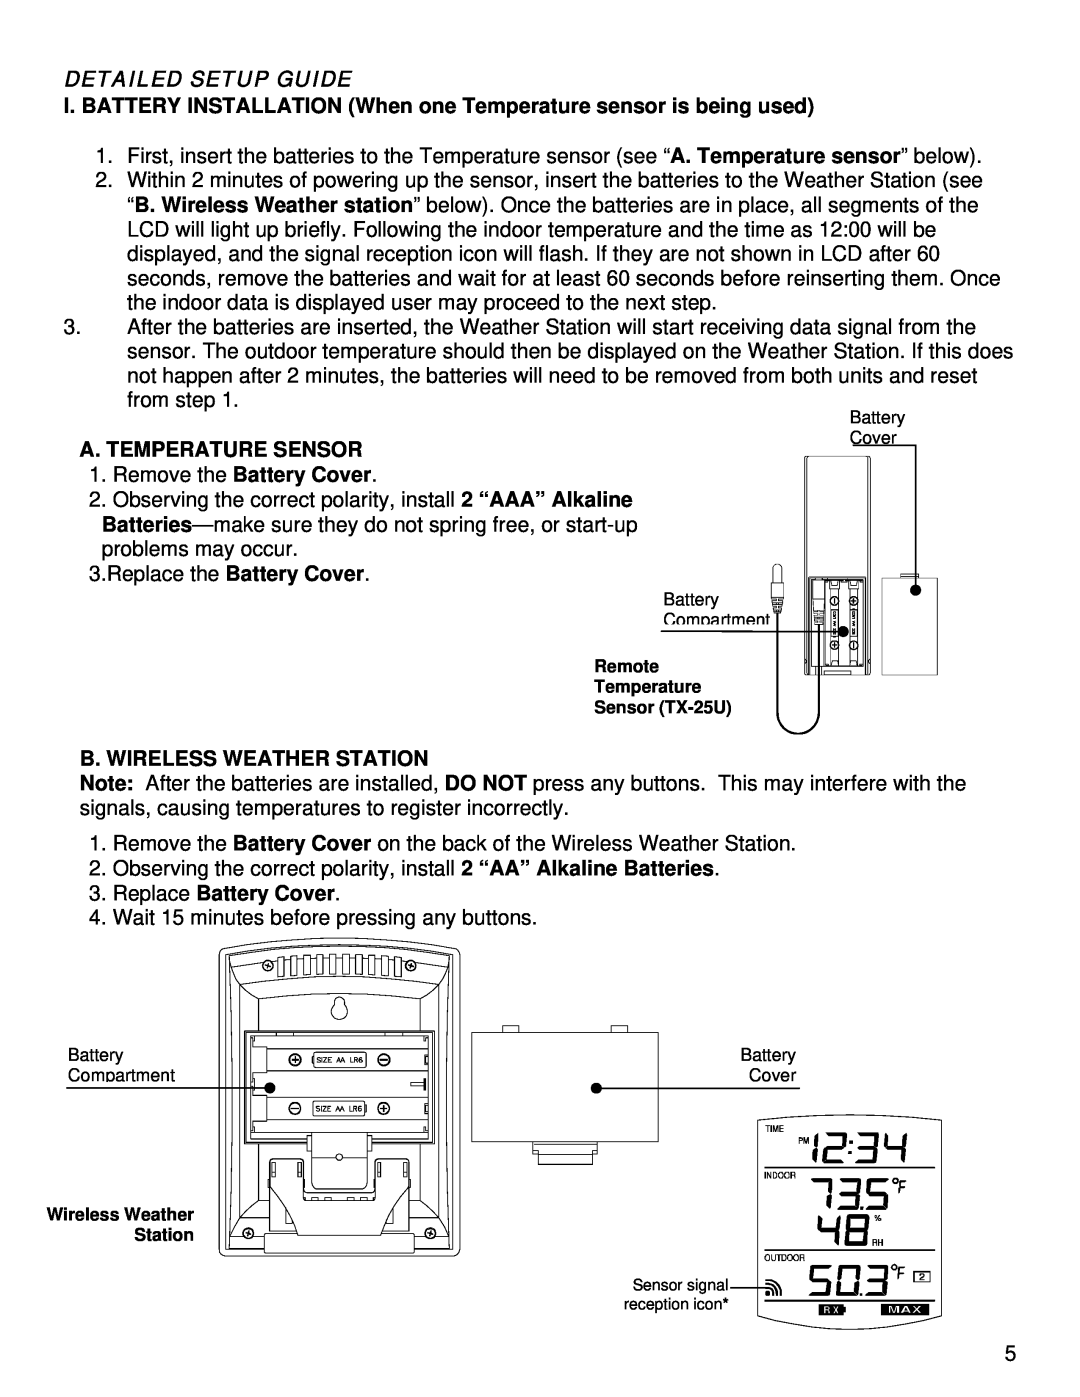 La Crosse Technology WS-9029U instruction manual Detailed Setup Guide, A. TEMPERATURE SENSOR 1.Remove the Battery Cover 